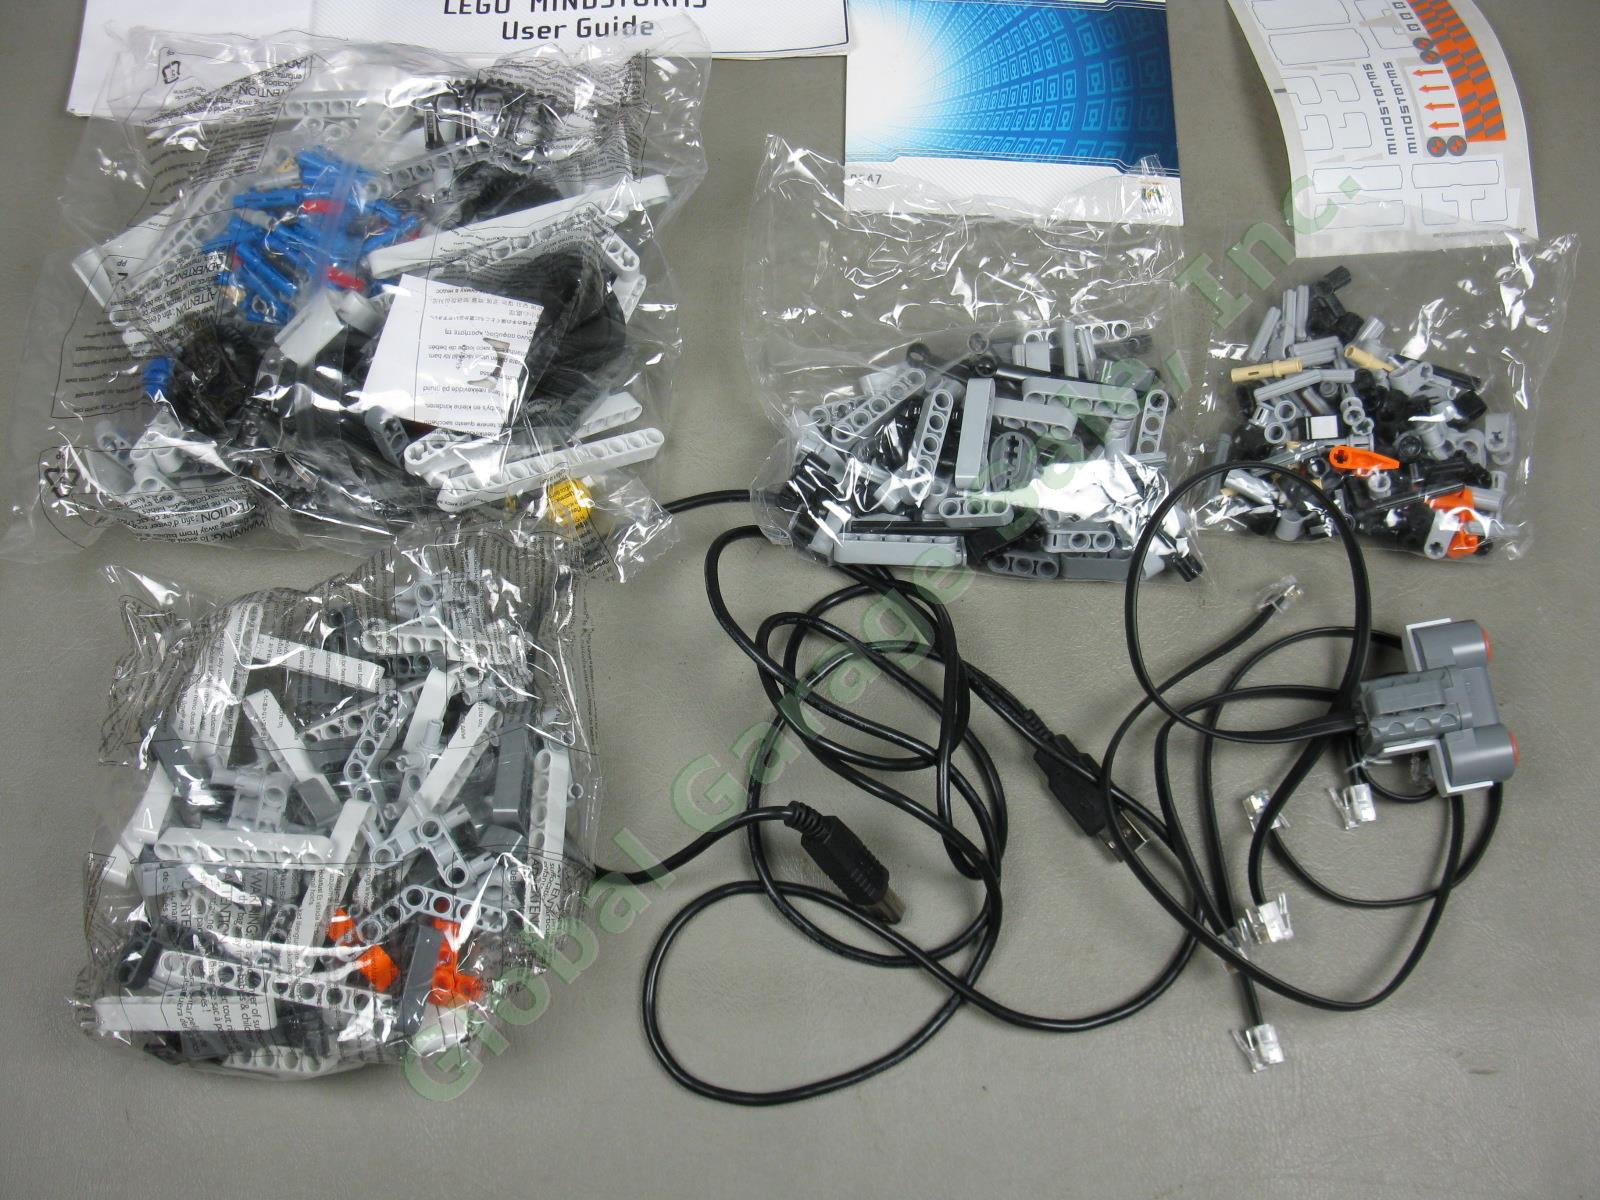 LEGO Mindstorms NXT 2.0 8547 Robot Building Program Set PC/MAC Bluetooth USB 10+ 4